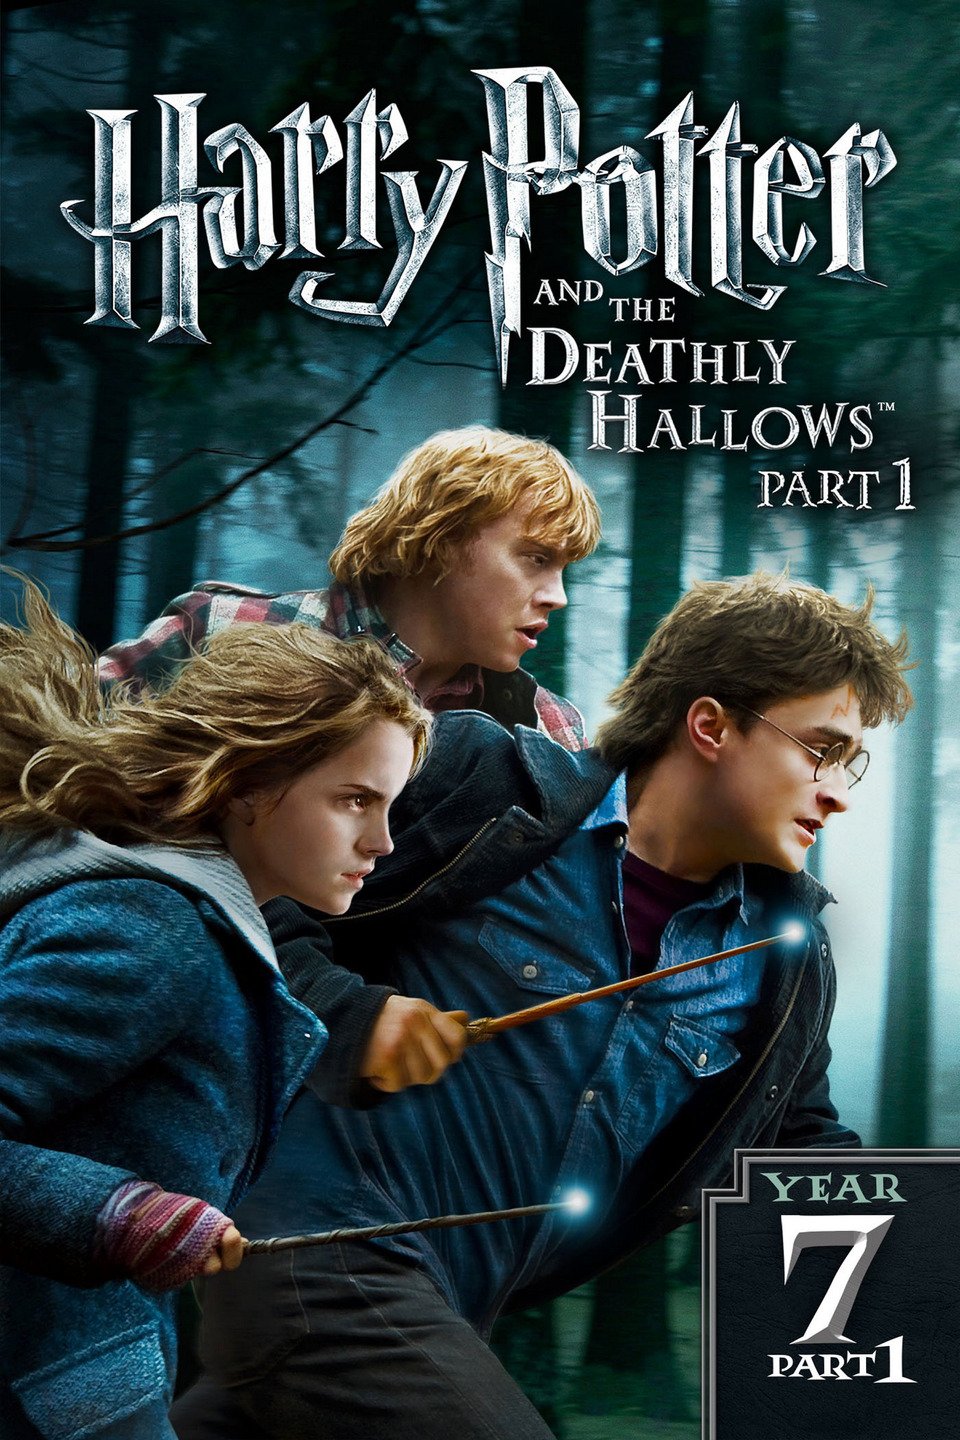 [MINI Super-HQ] Harry Potter and the Deathly Hallows: Part 1 (2010) แฮร์รี่ พอตเตอร์กับเครื่องรางยมทูต ภาค 7.1 [1080p] [พากย์ไทย 5.1 + อังกฤษ 5.1] [บรรยายไทย + อังกฤษ] [เสียงไทย + ซับไทย] [ONE2UP]